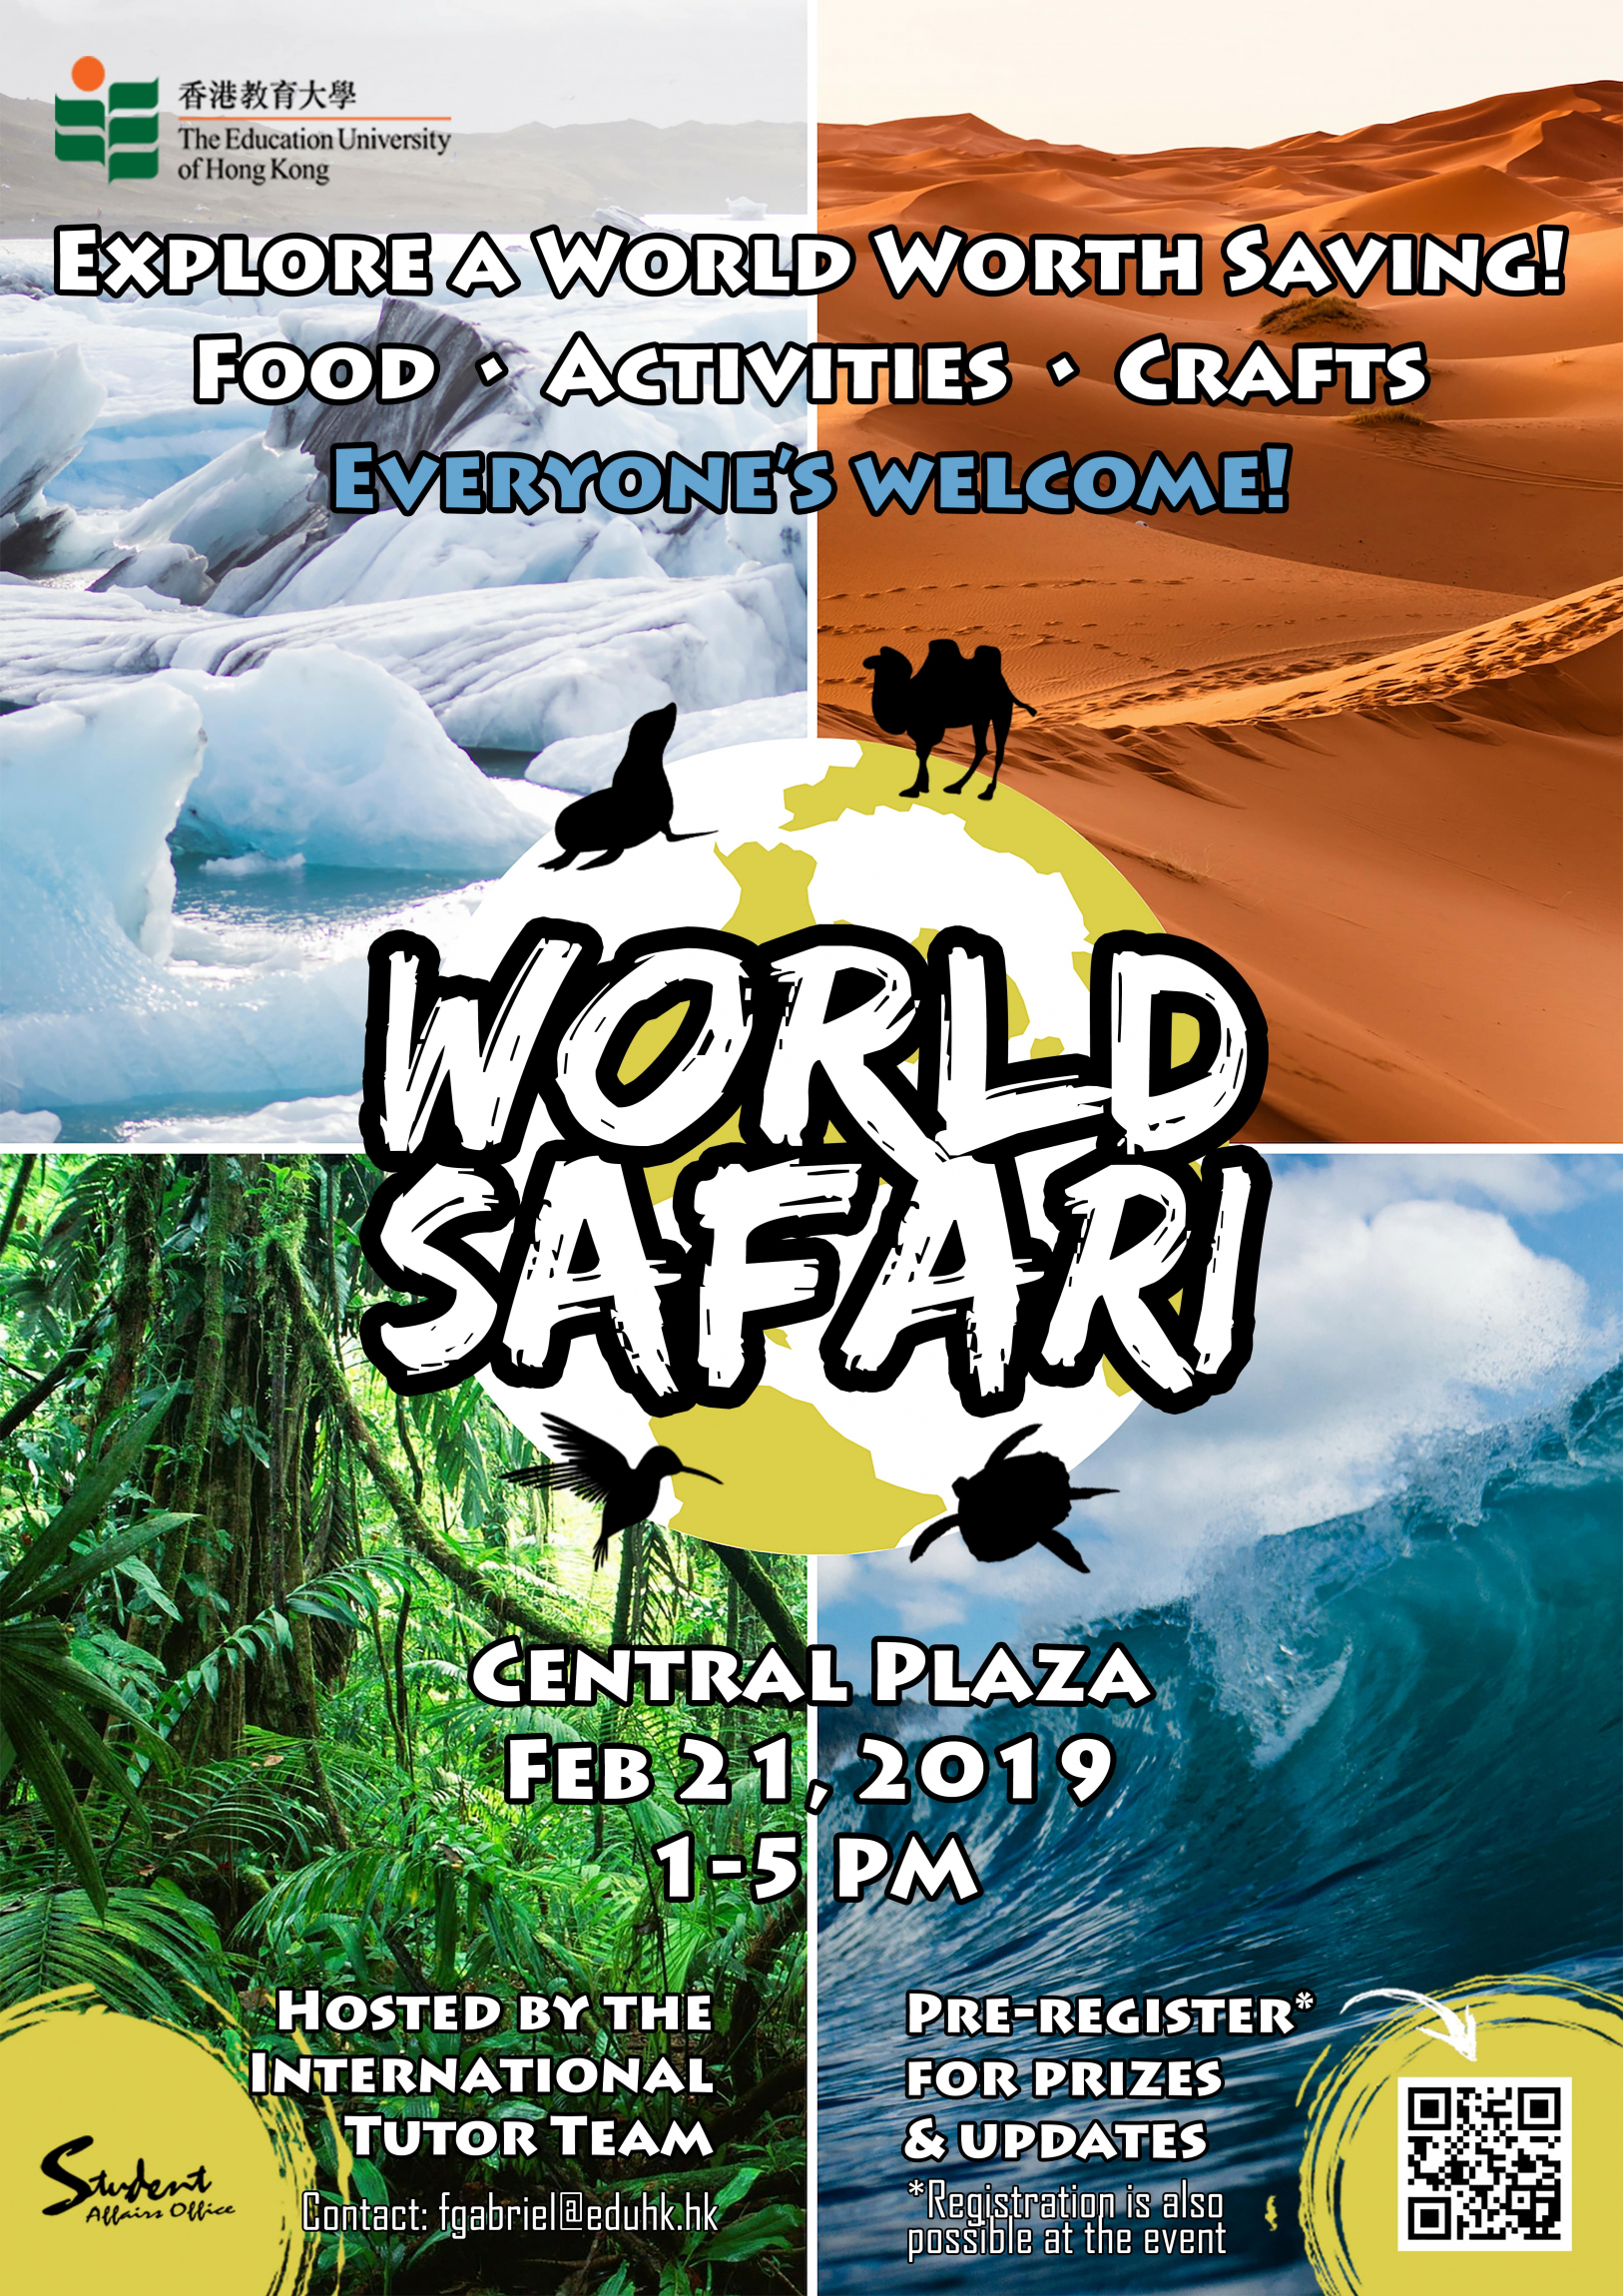 Self Photos / Files - Poster_SAO's World Safari (21 February 2019)